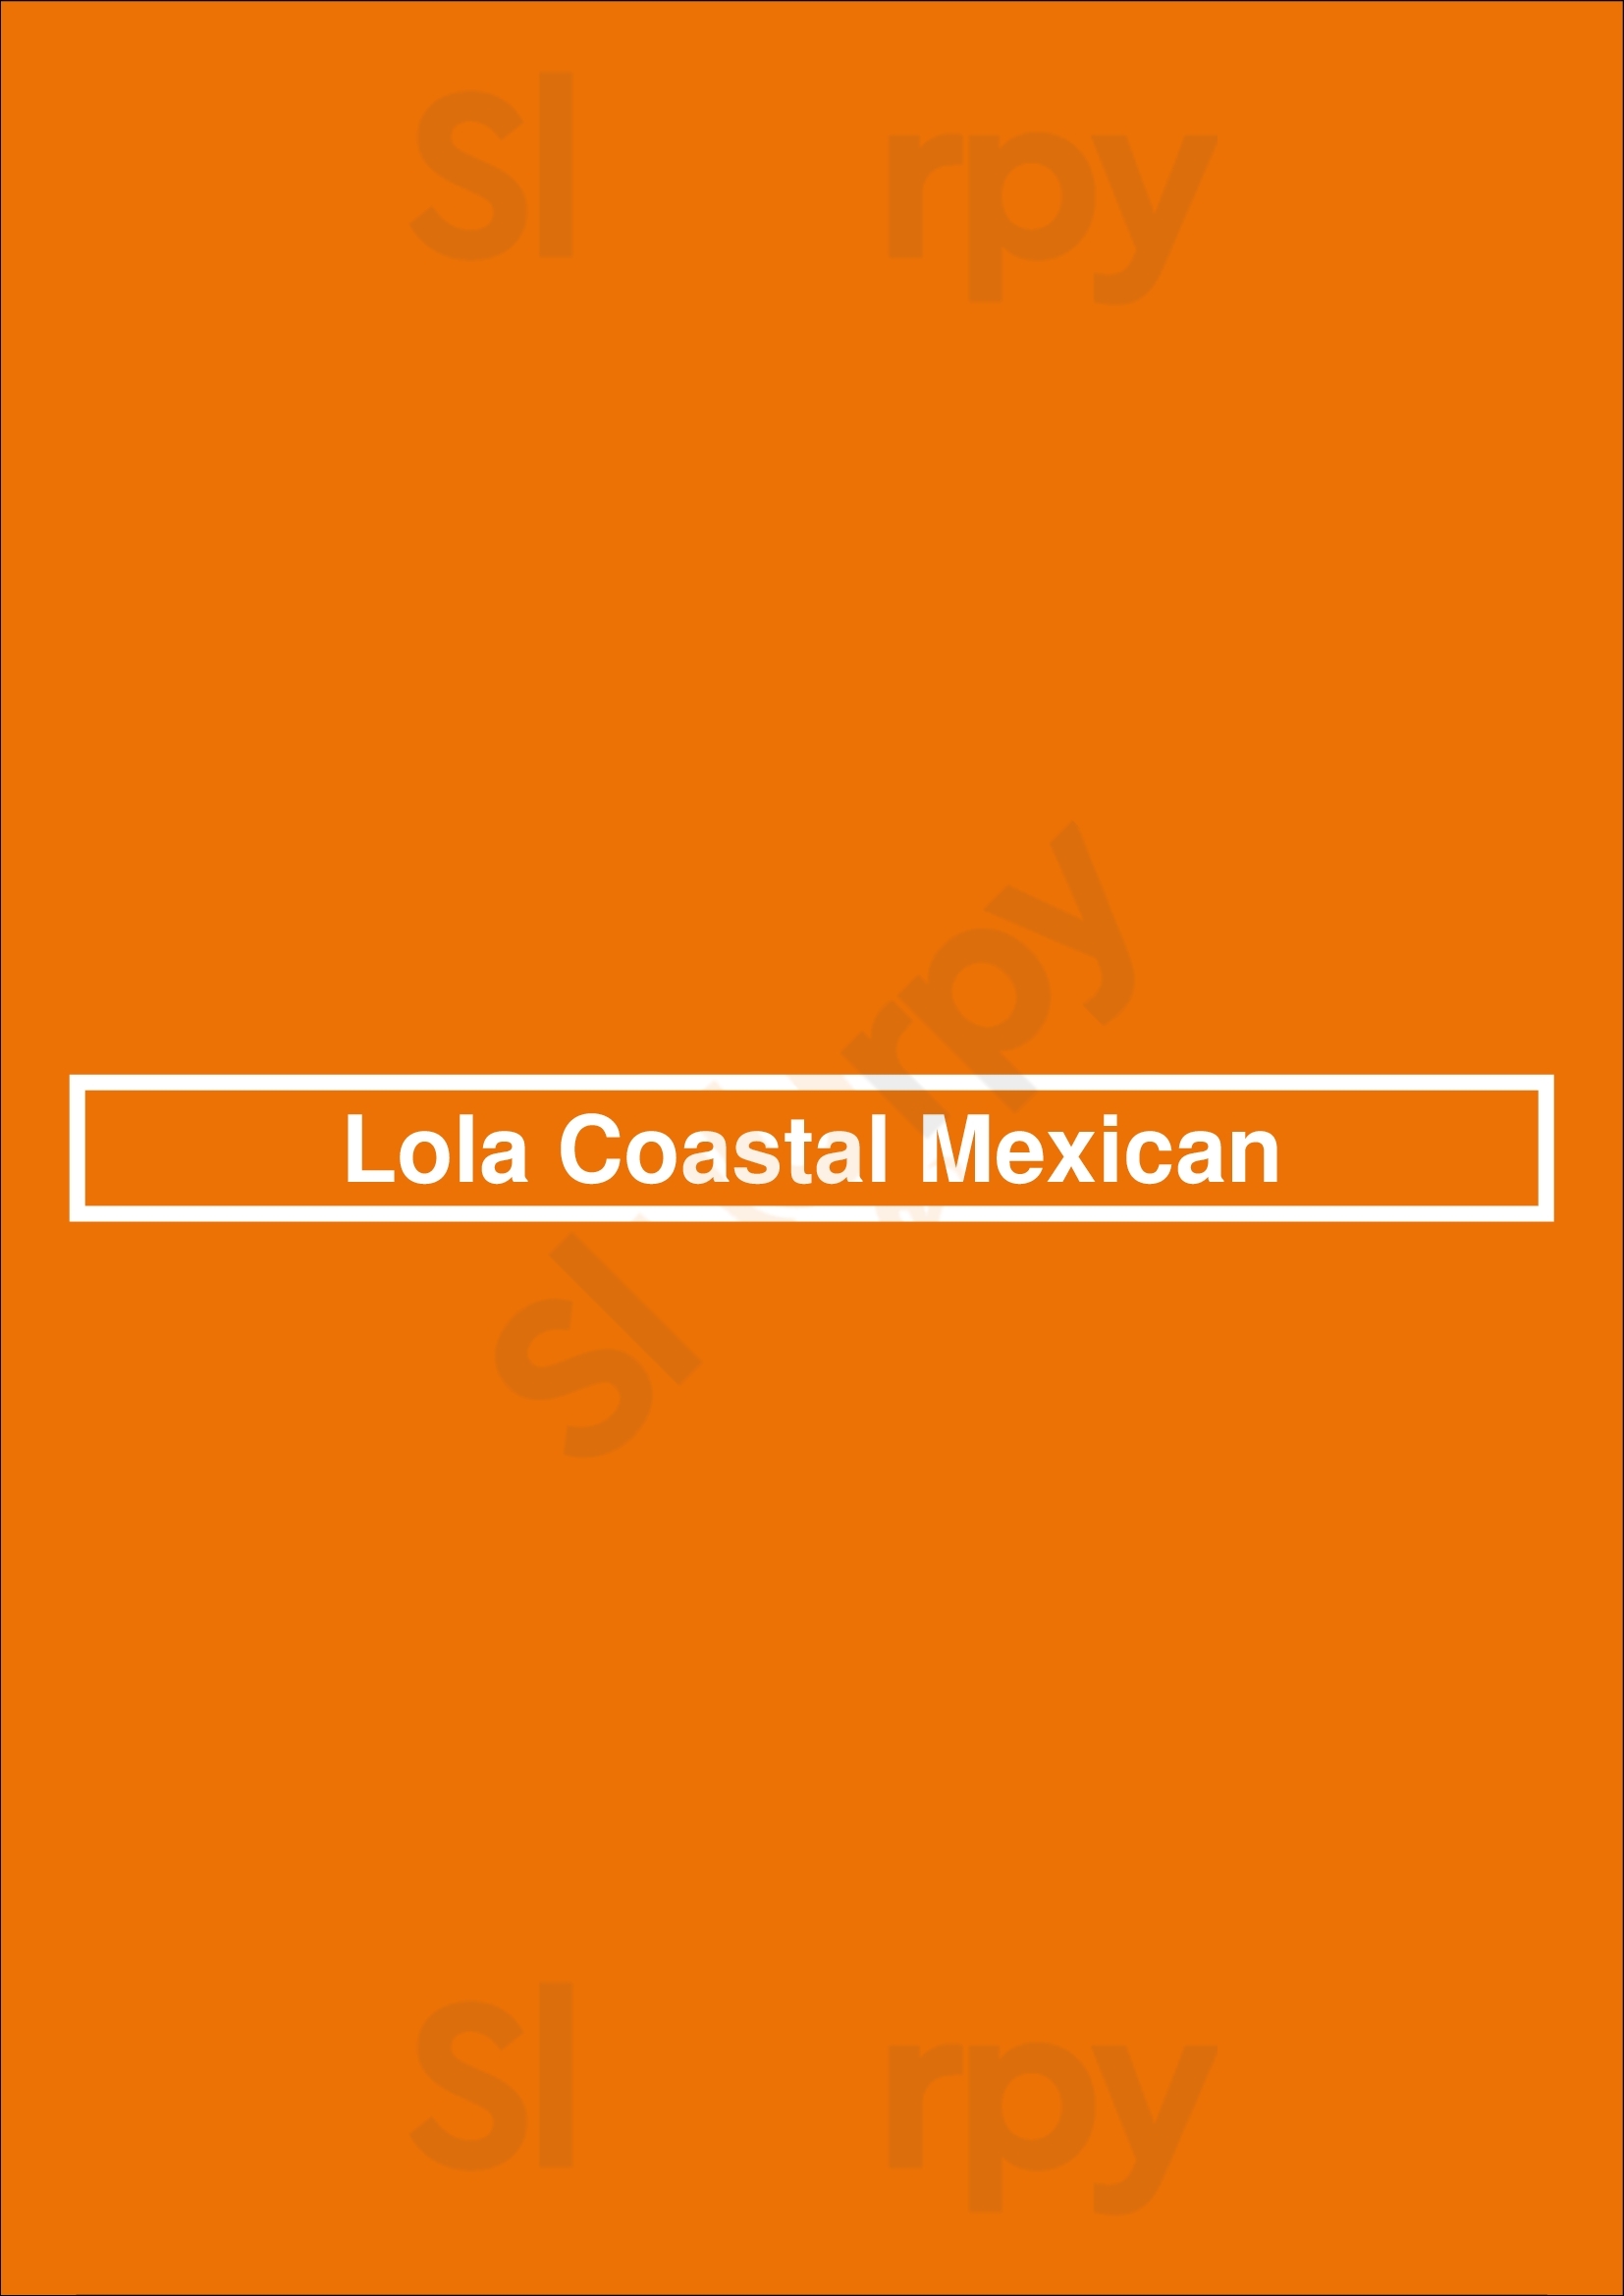 Lola Coastal Mexican Denver Menu - 1